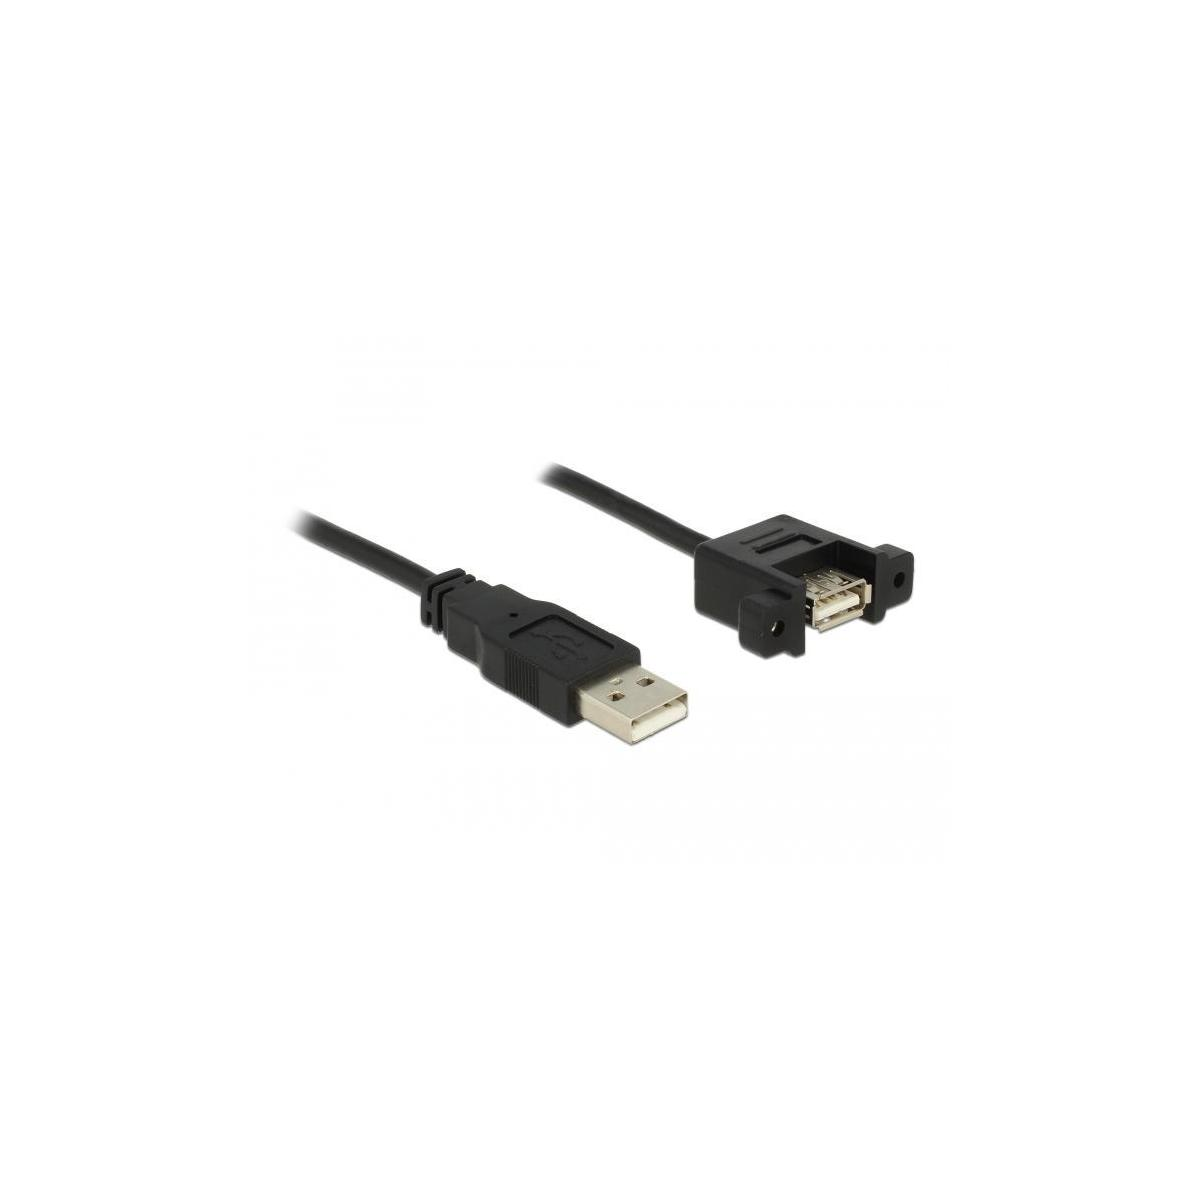 USB DELOCK Kabel, 85462 Schwarz